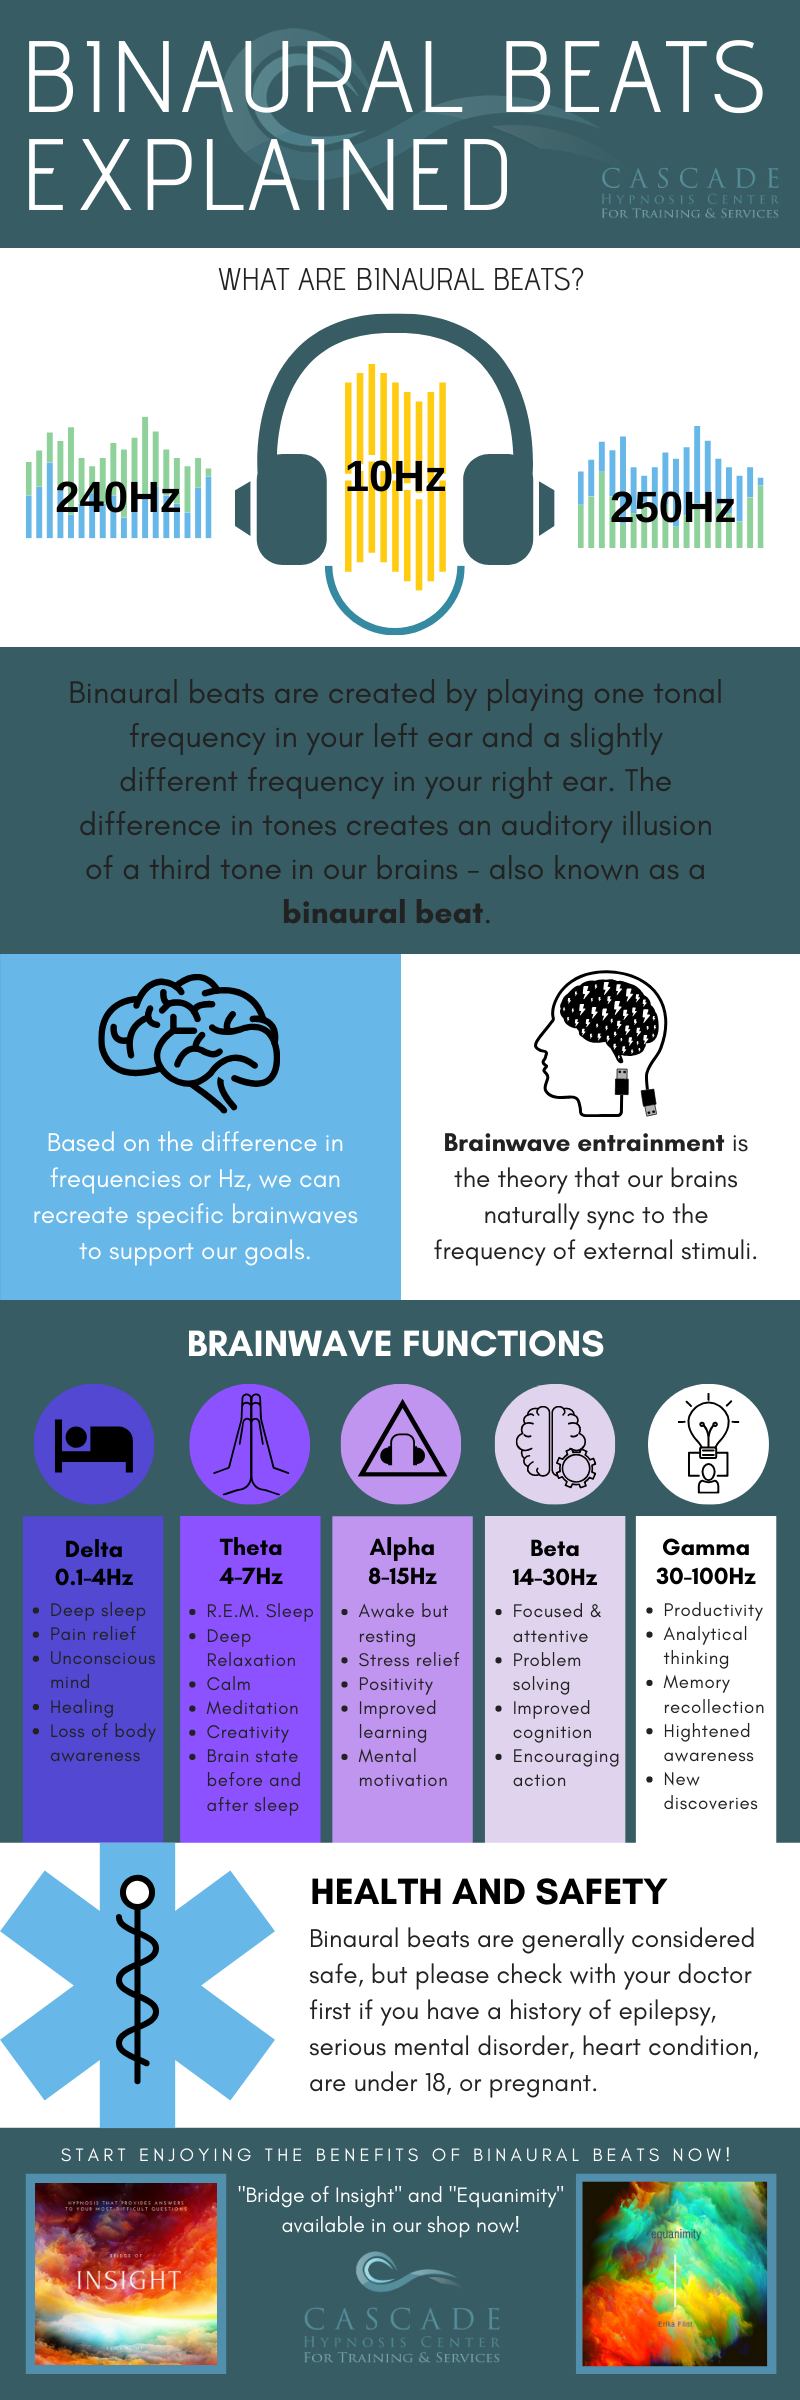 Binaural Beats and Brainwave 